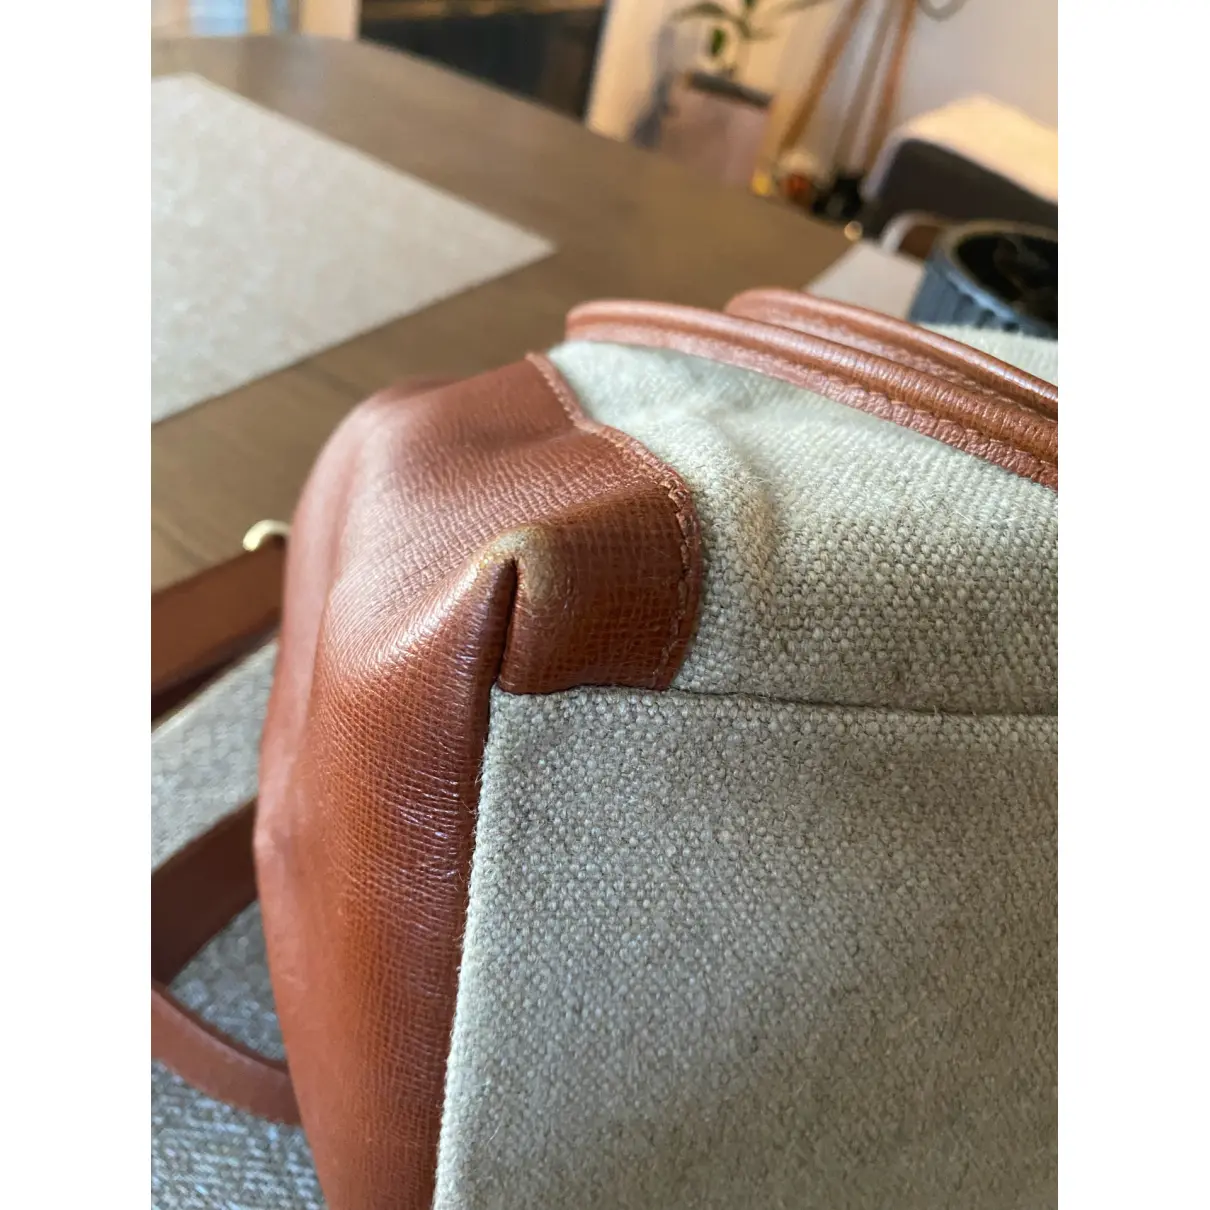 Buy Fendi Cloth crossbody bag online - Vintage